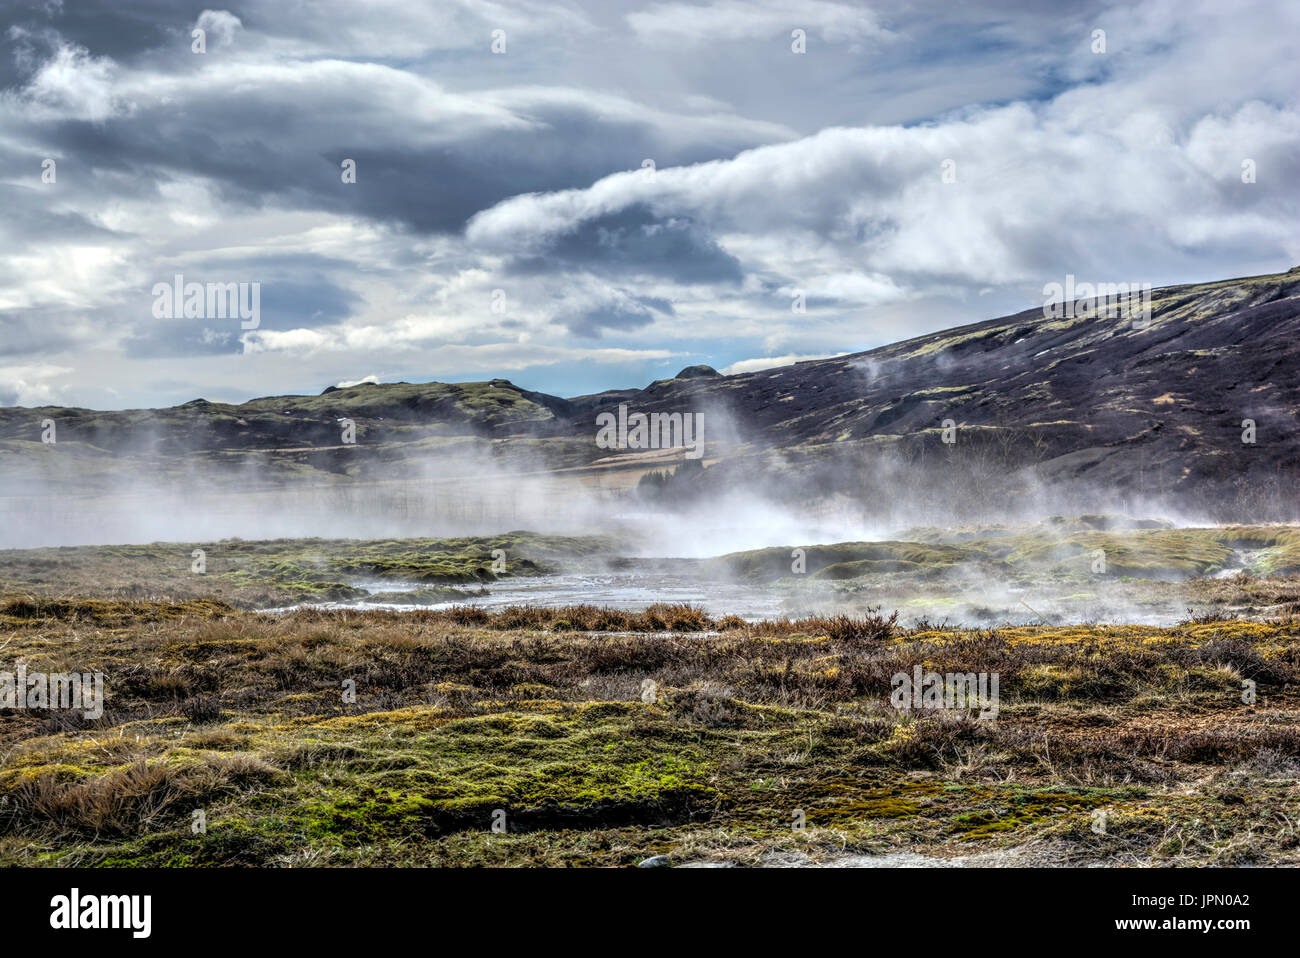 Geyser erupting in Iceland Stock Photo